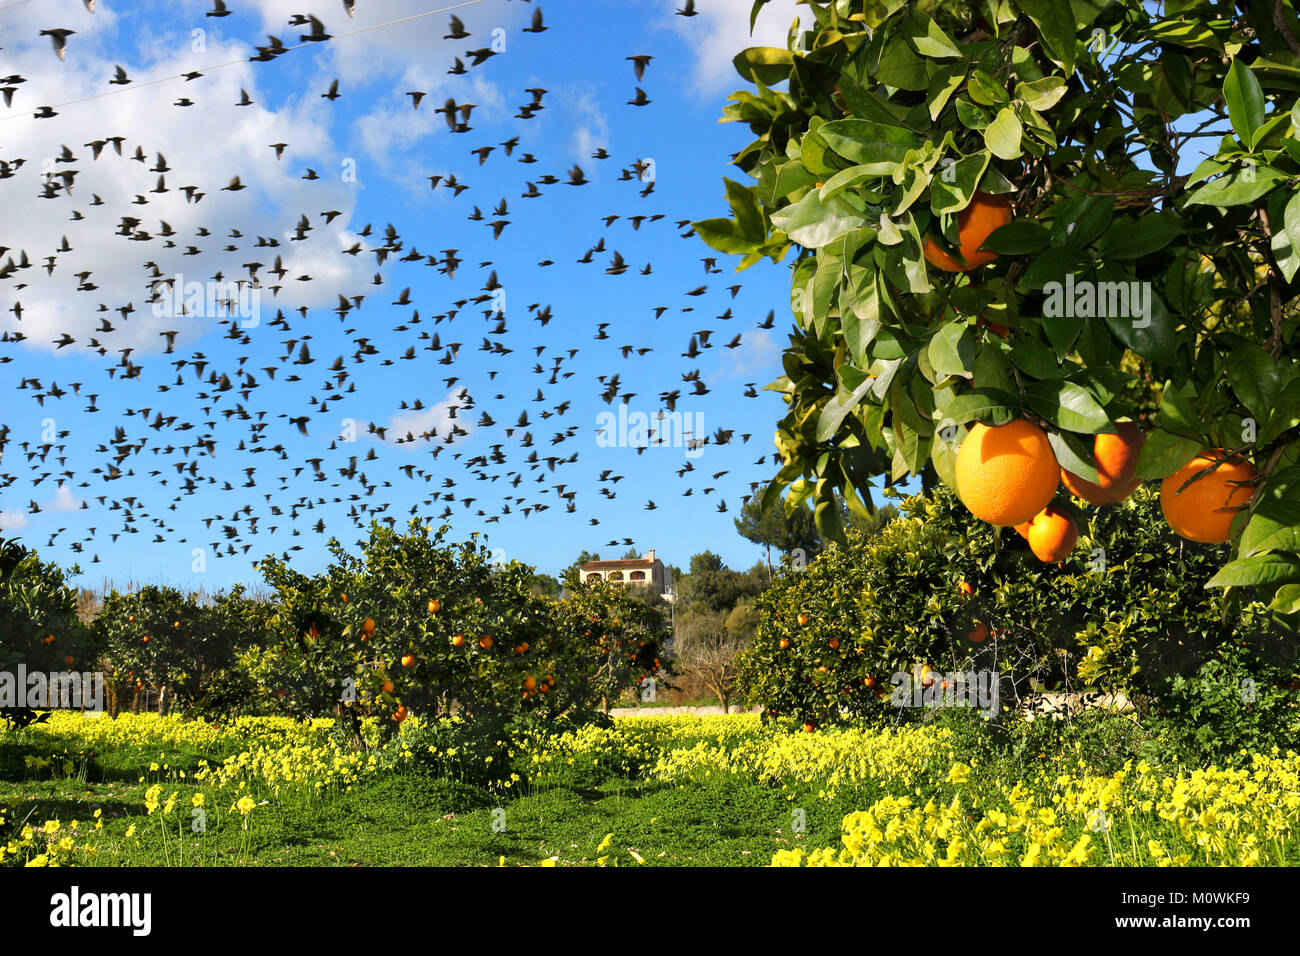 a flock of birds flying over an orange plantation Stock Photo